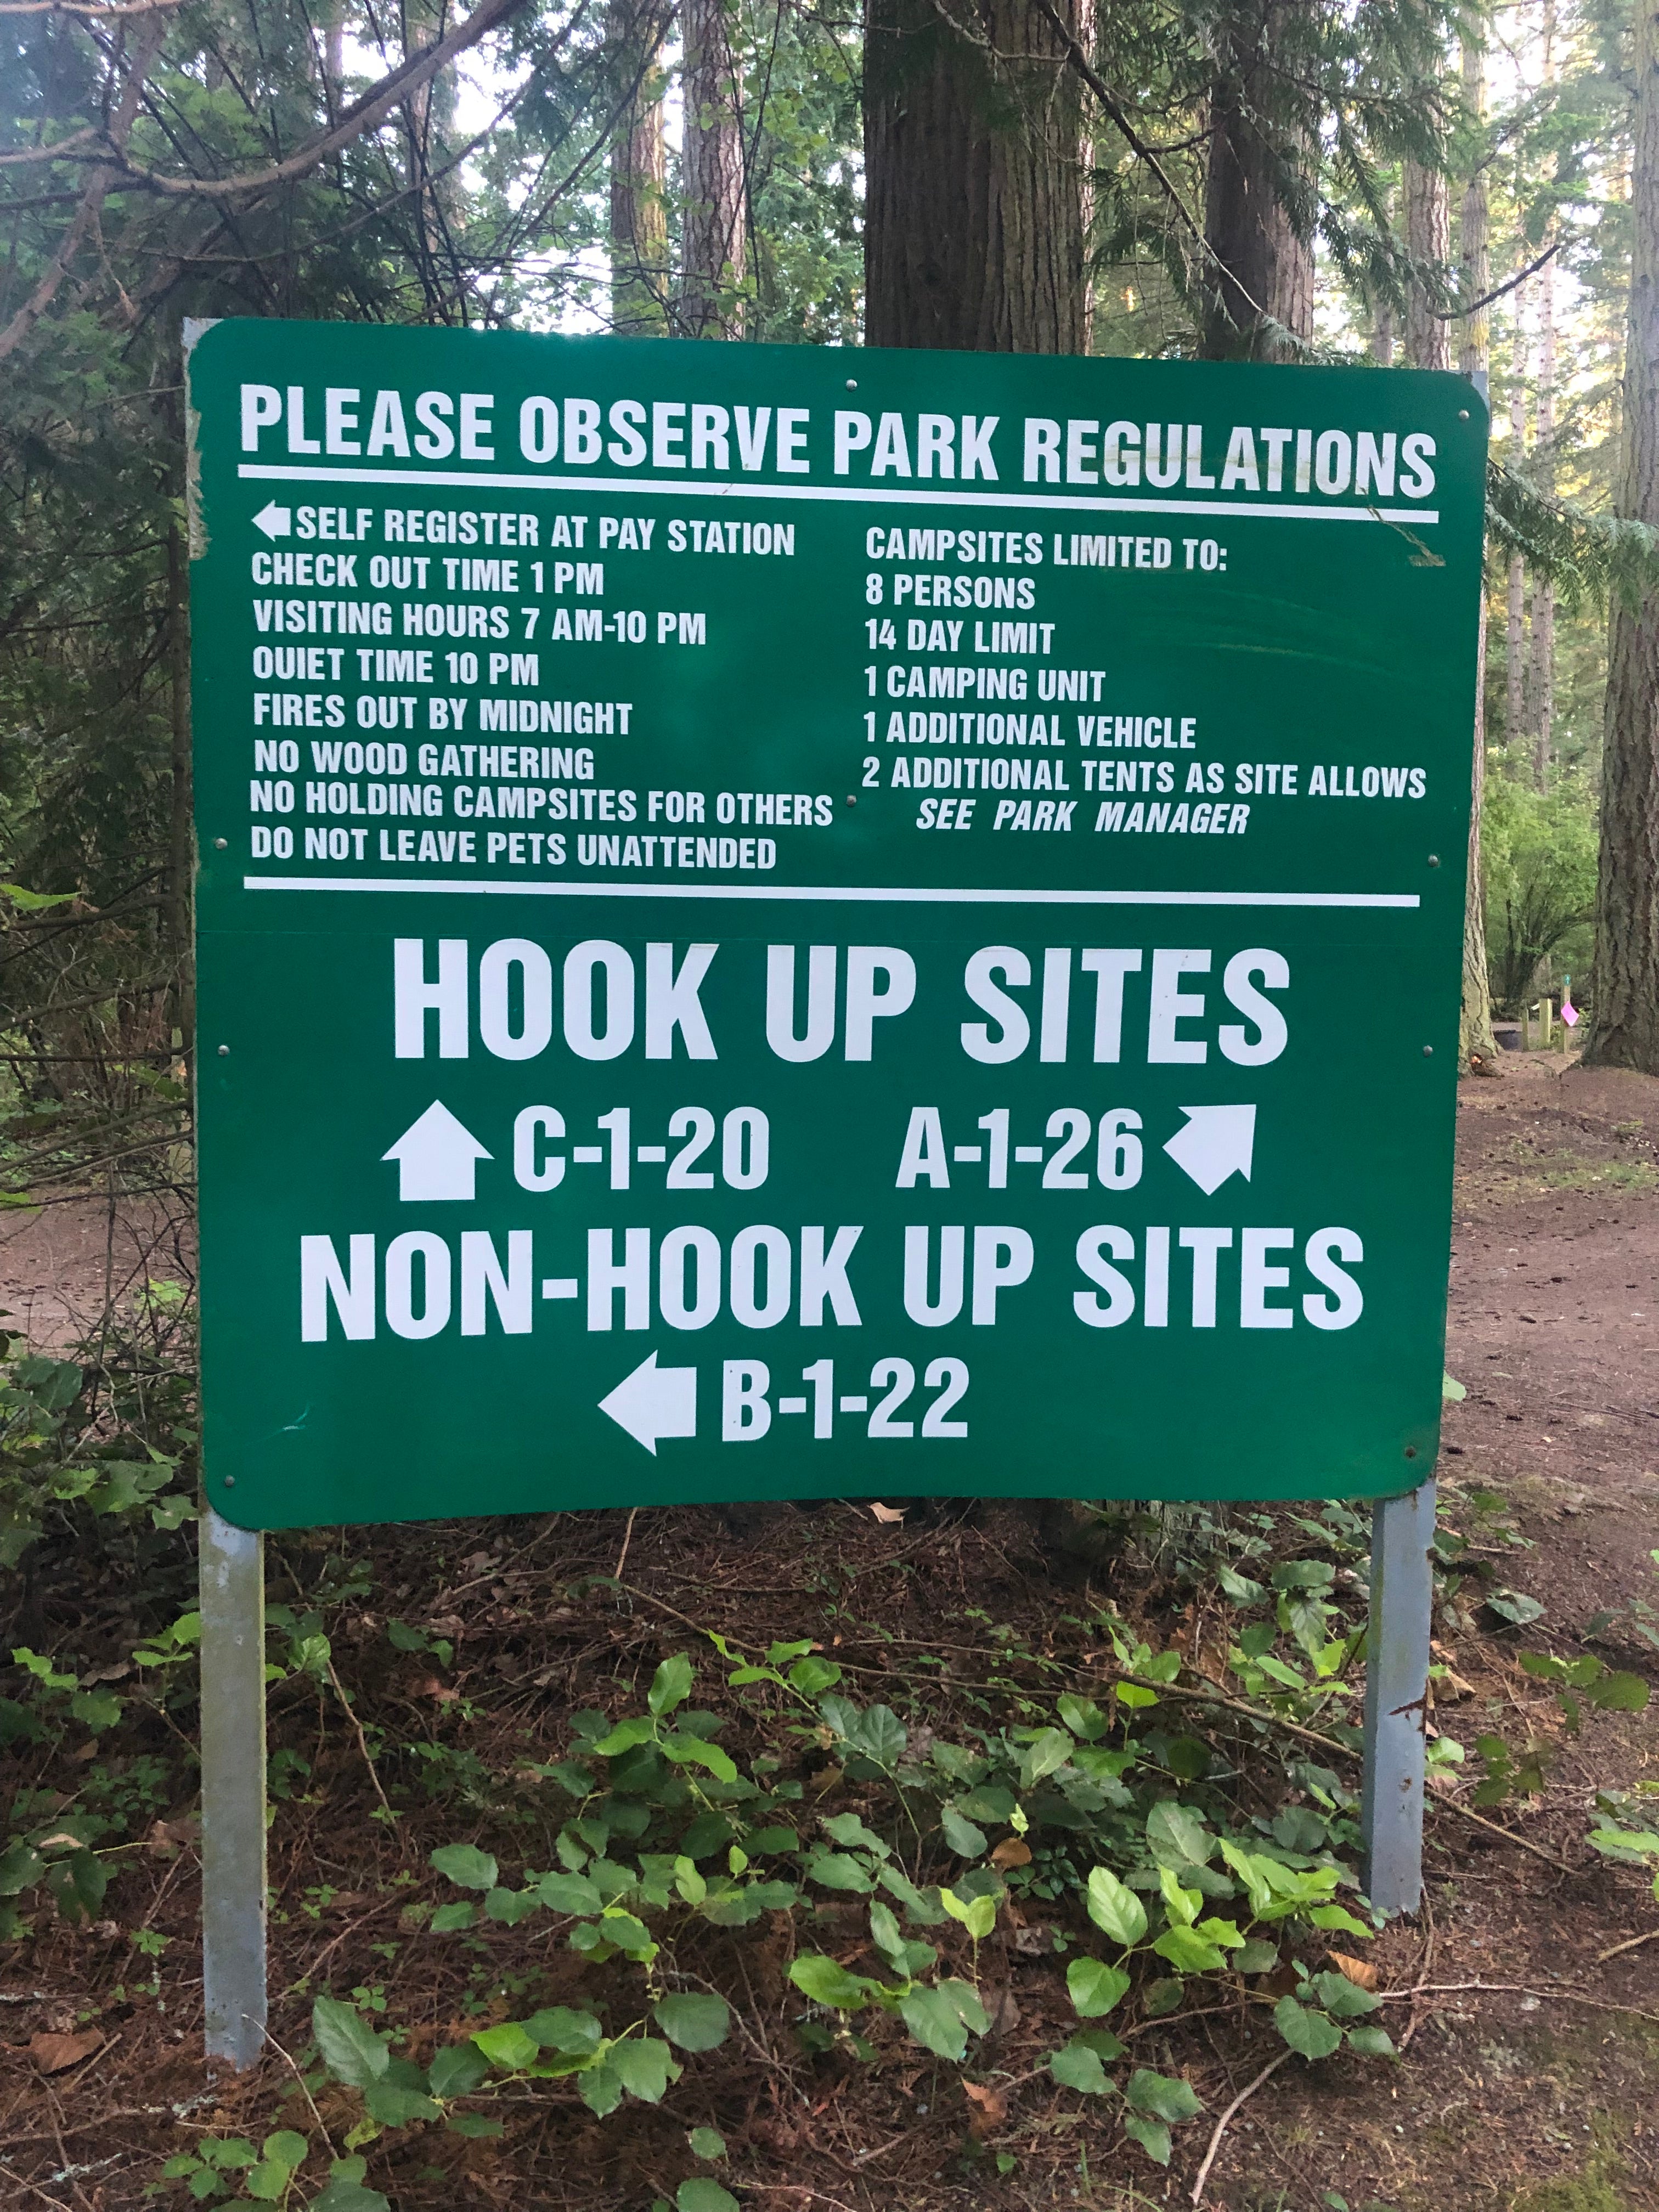 Good signage in park